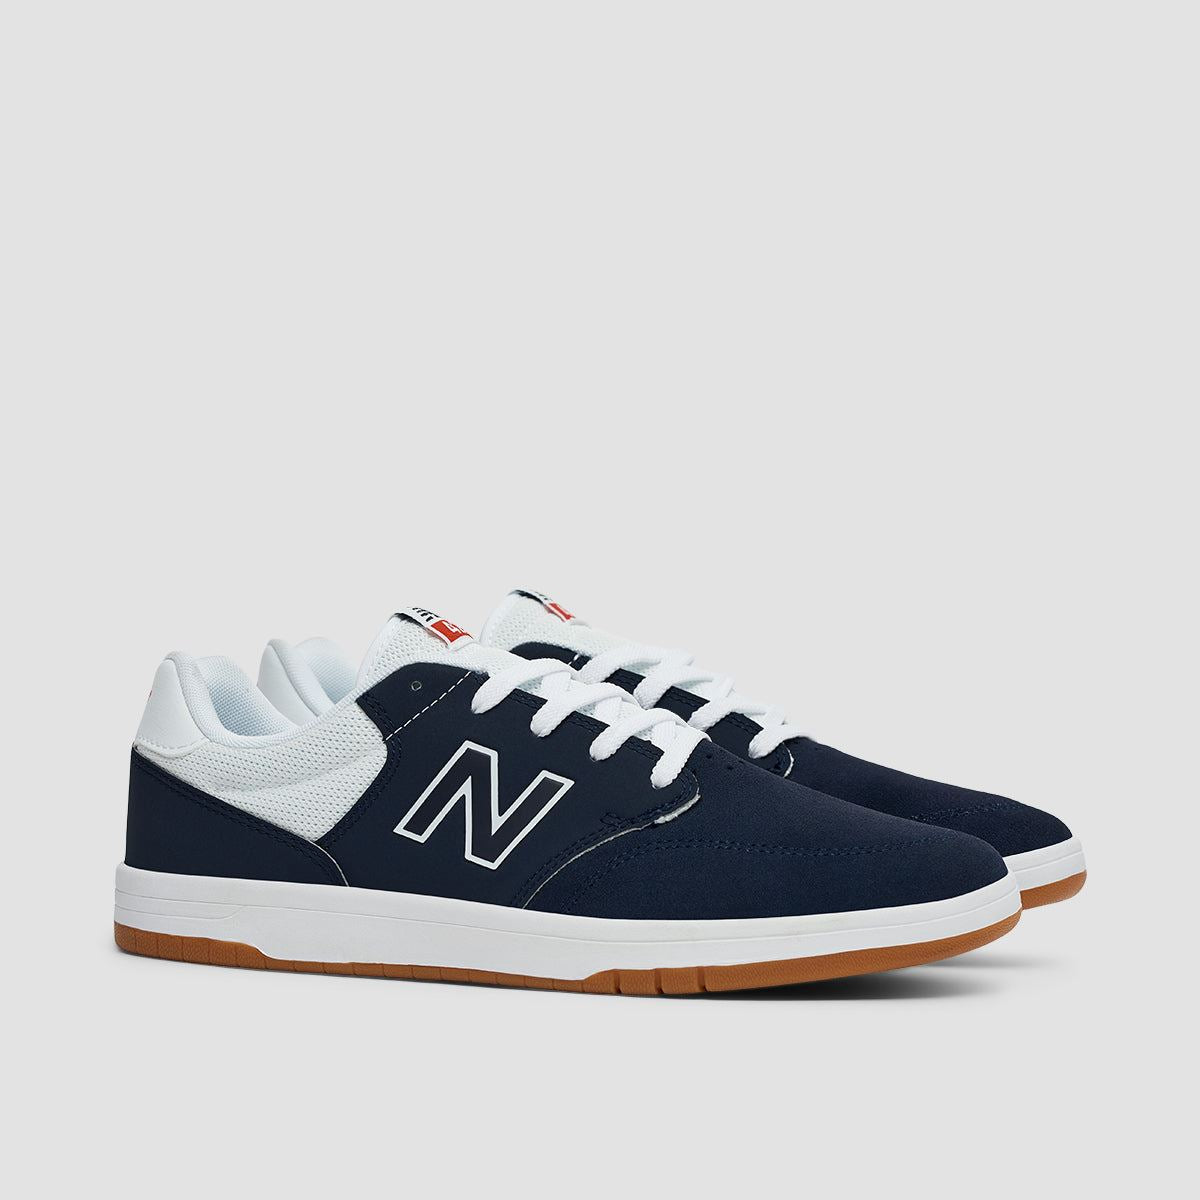 New Balance Numeric 425 V1 Shoes - Navy/White